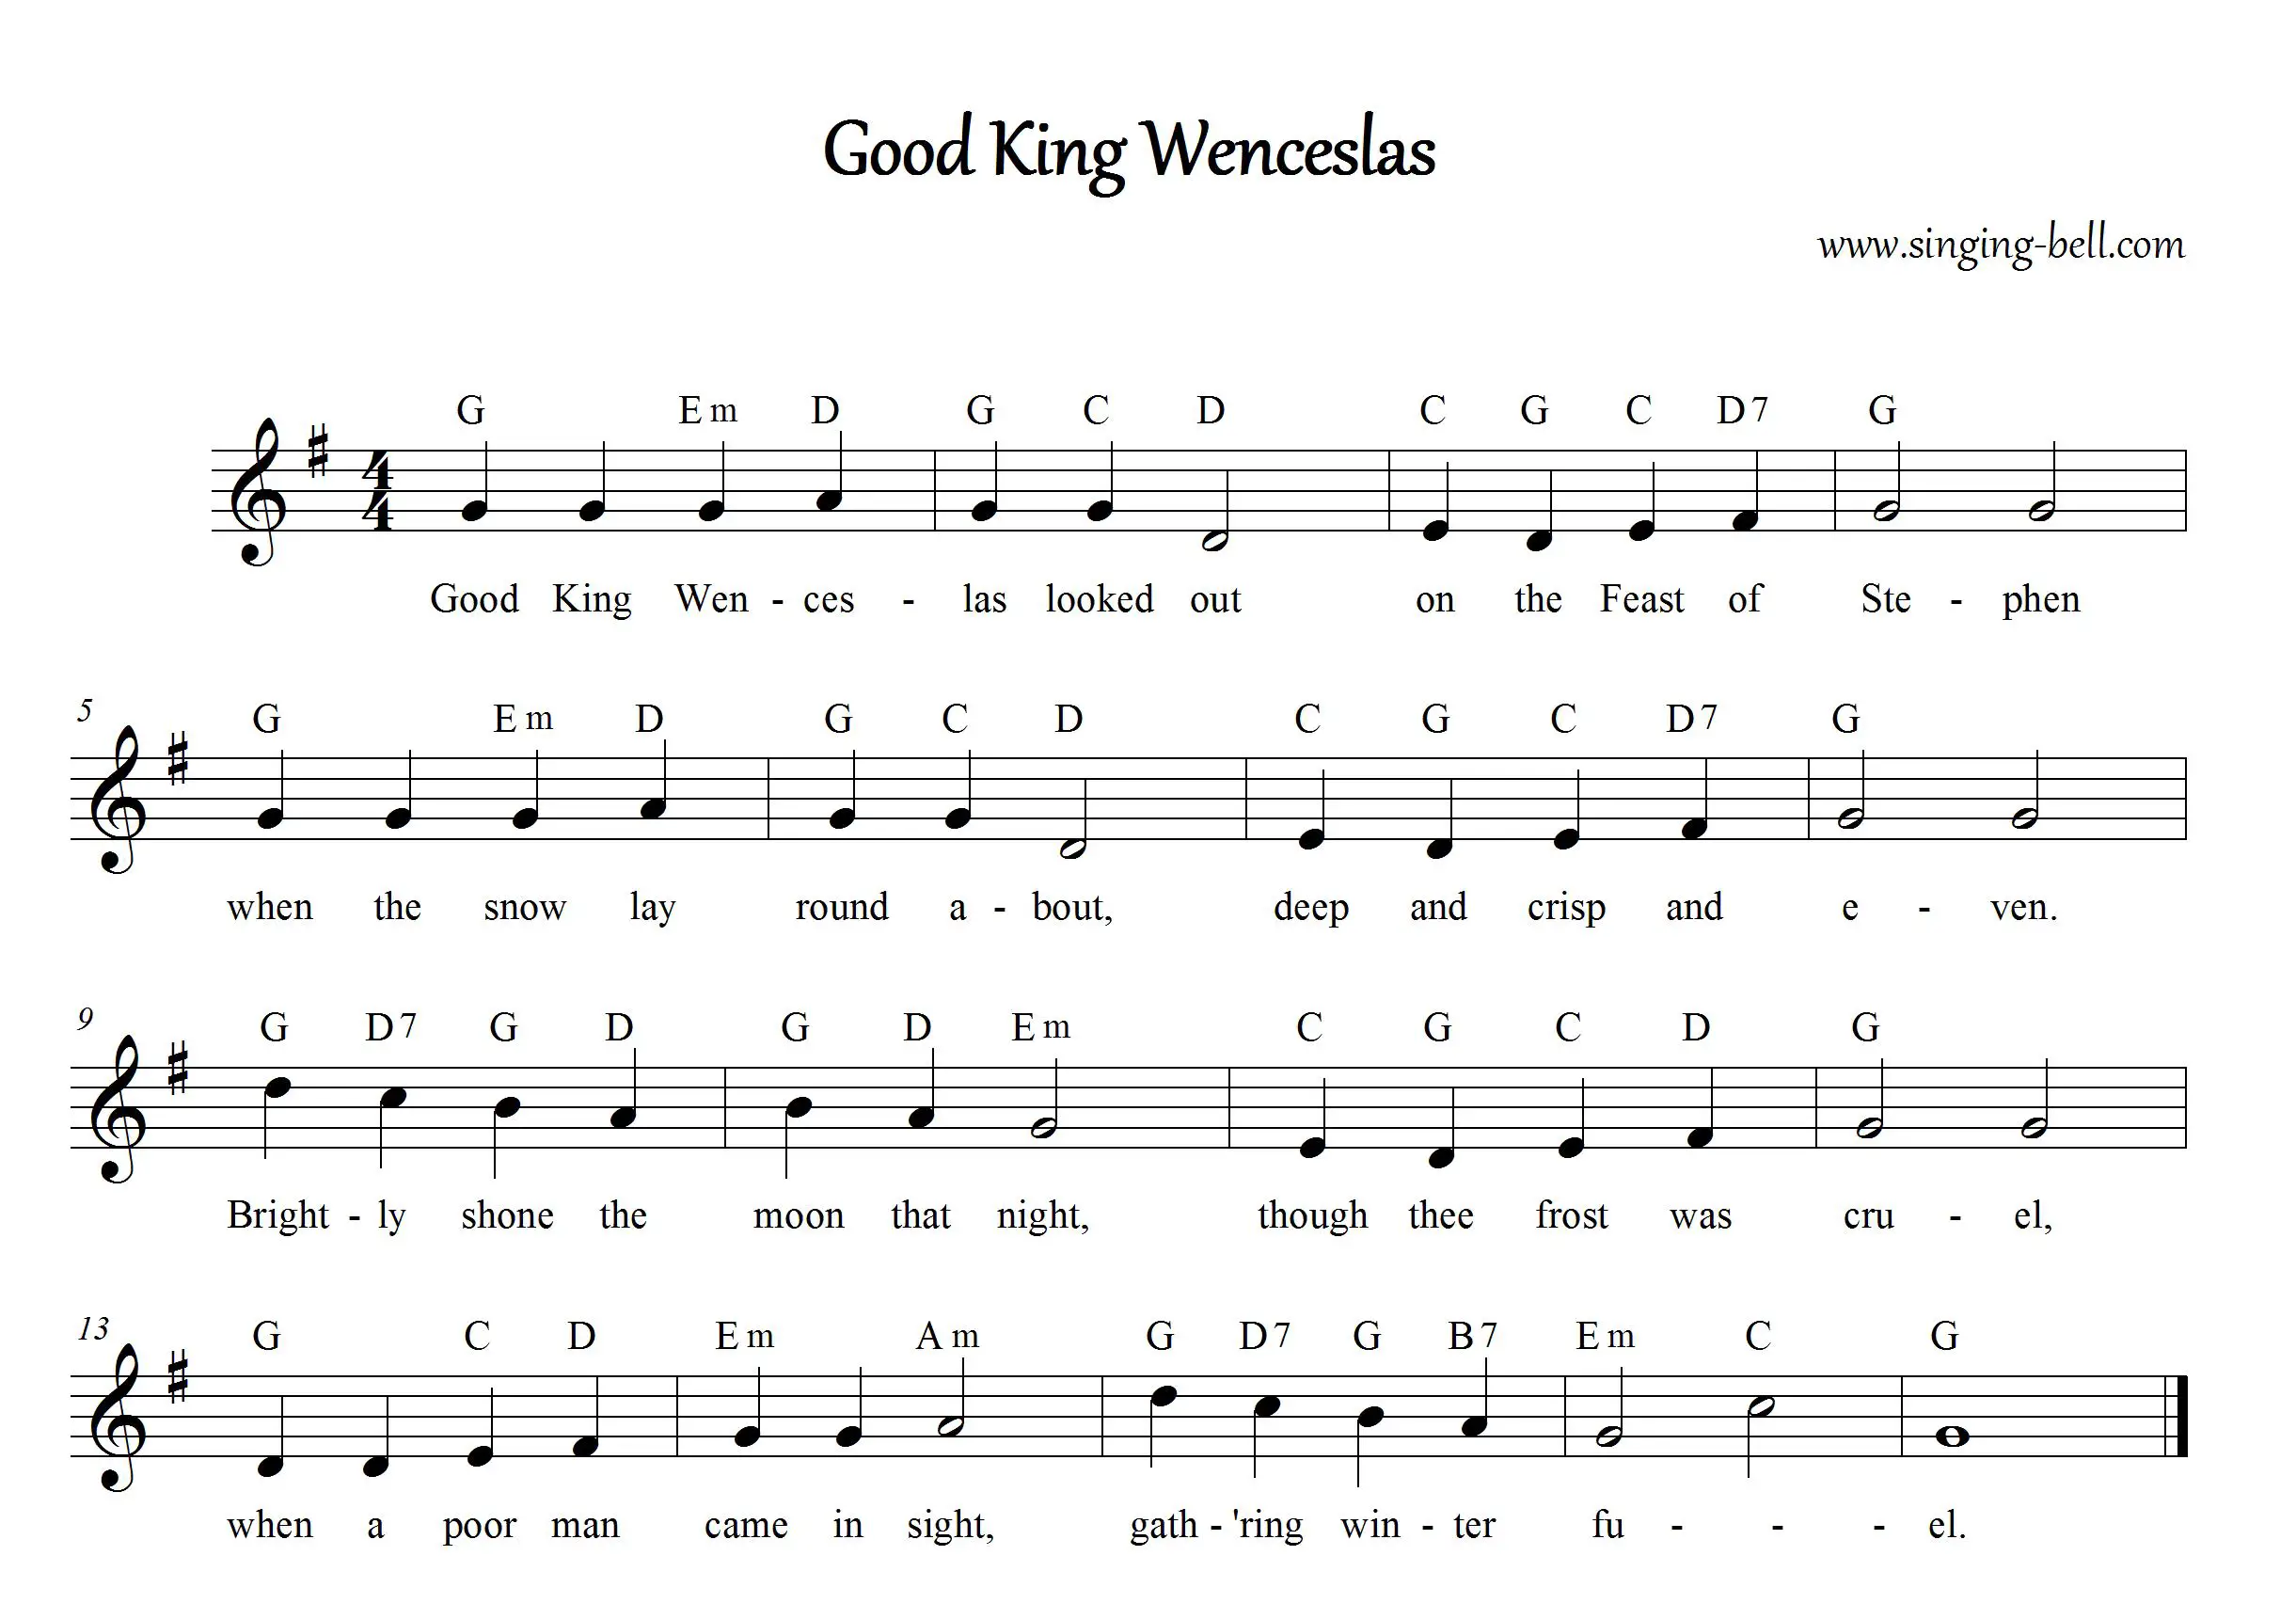 Good King Wenceslas - Christmas Music Score (in G)